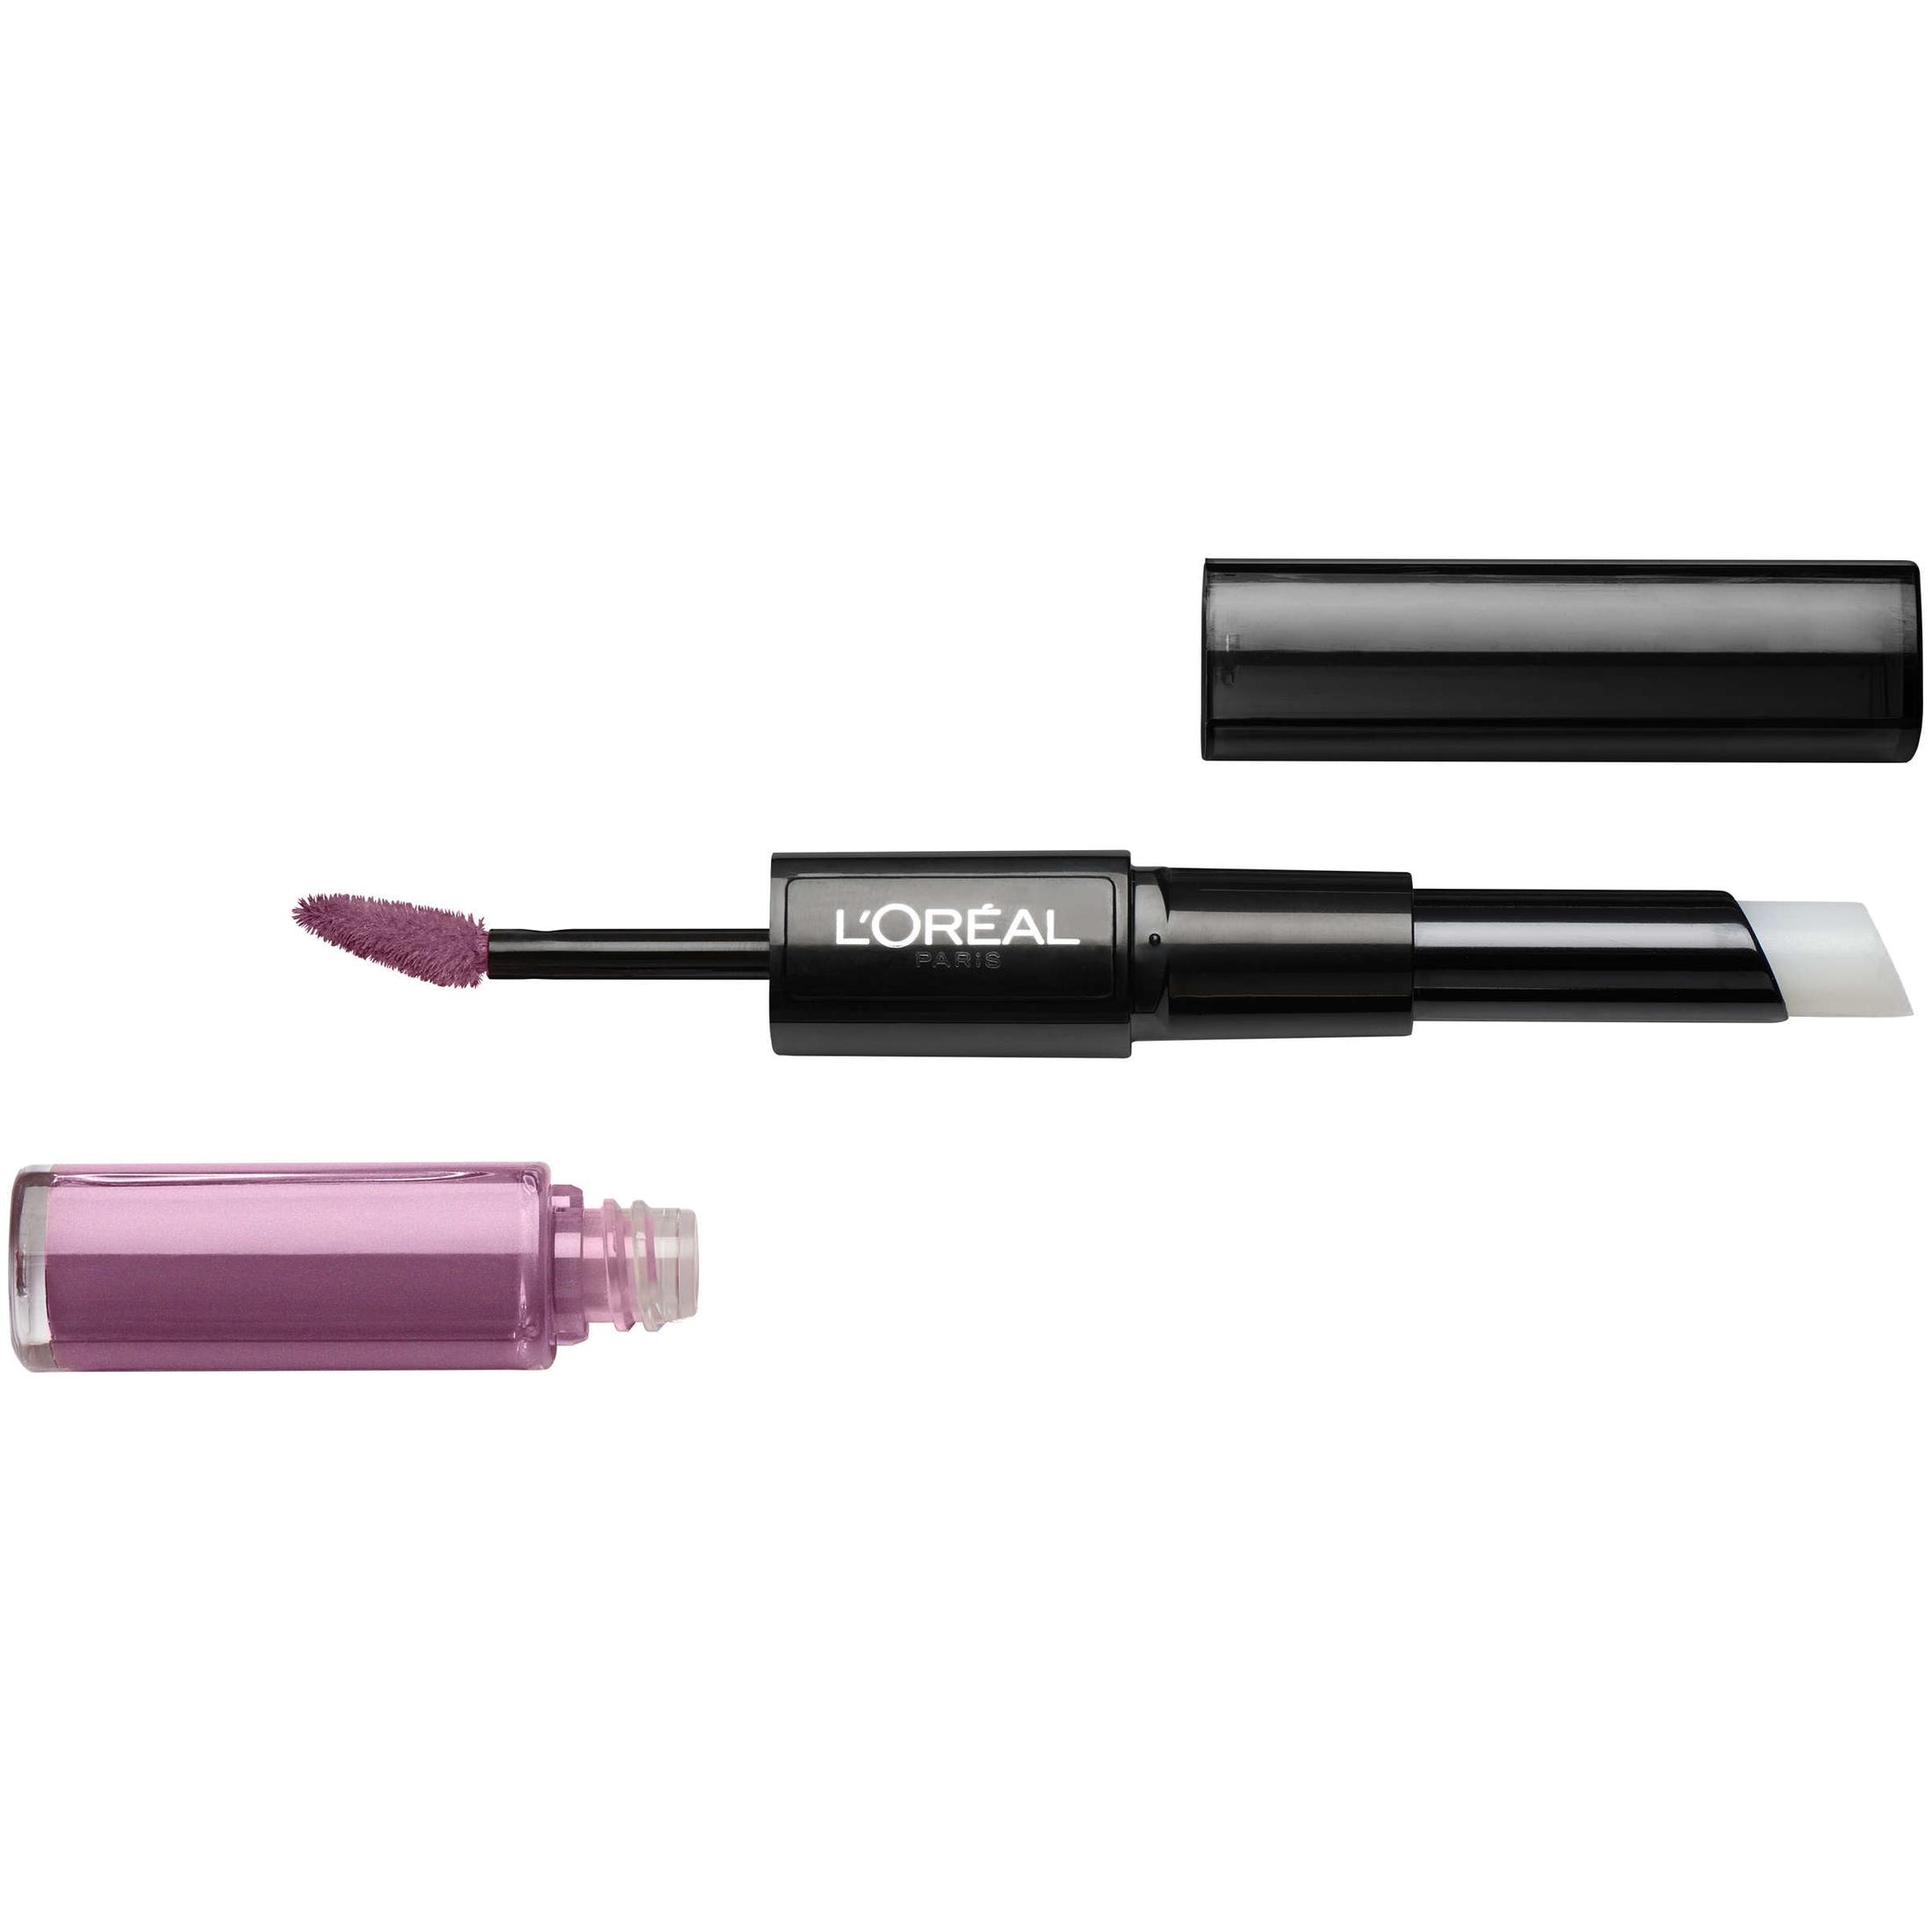 L'Oreal Paris Infallible Pro Last 2 Step Lipstick, Lilac Infinite - image 1 of 8